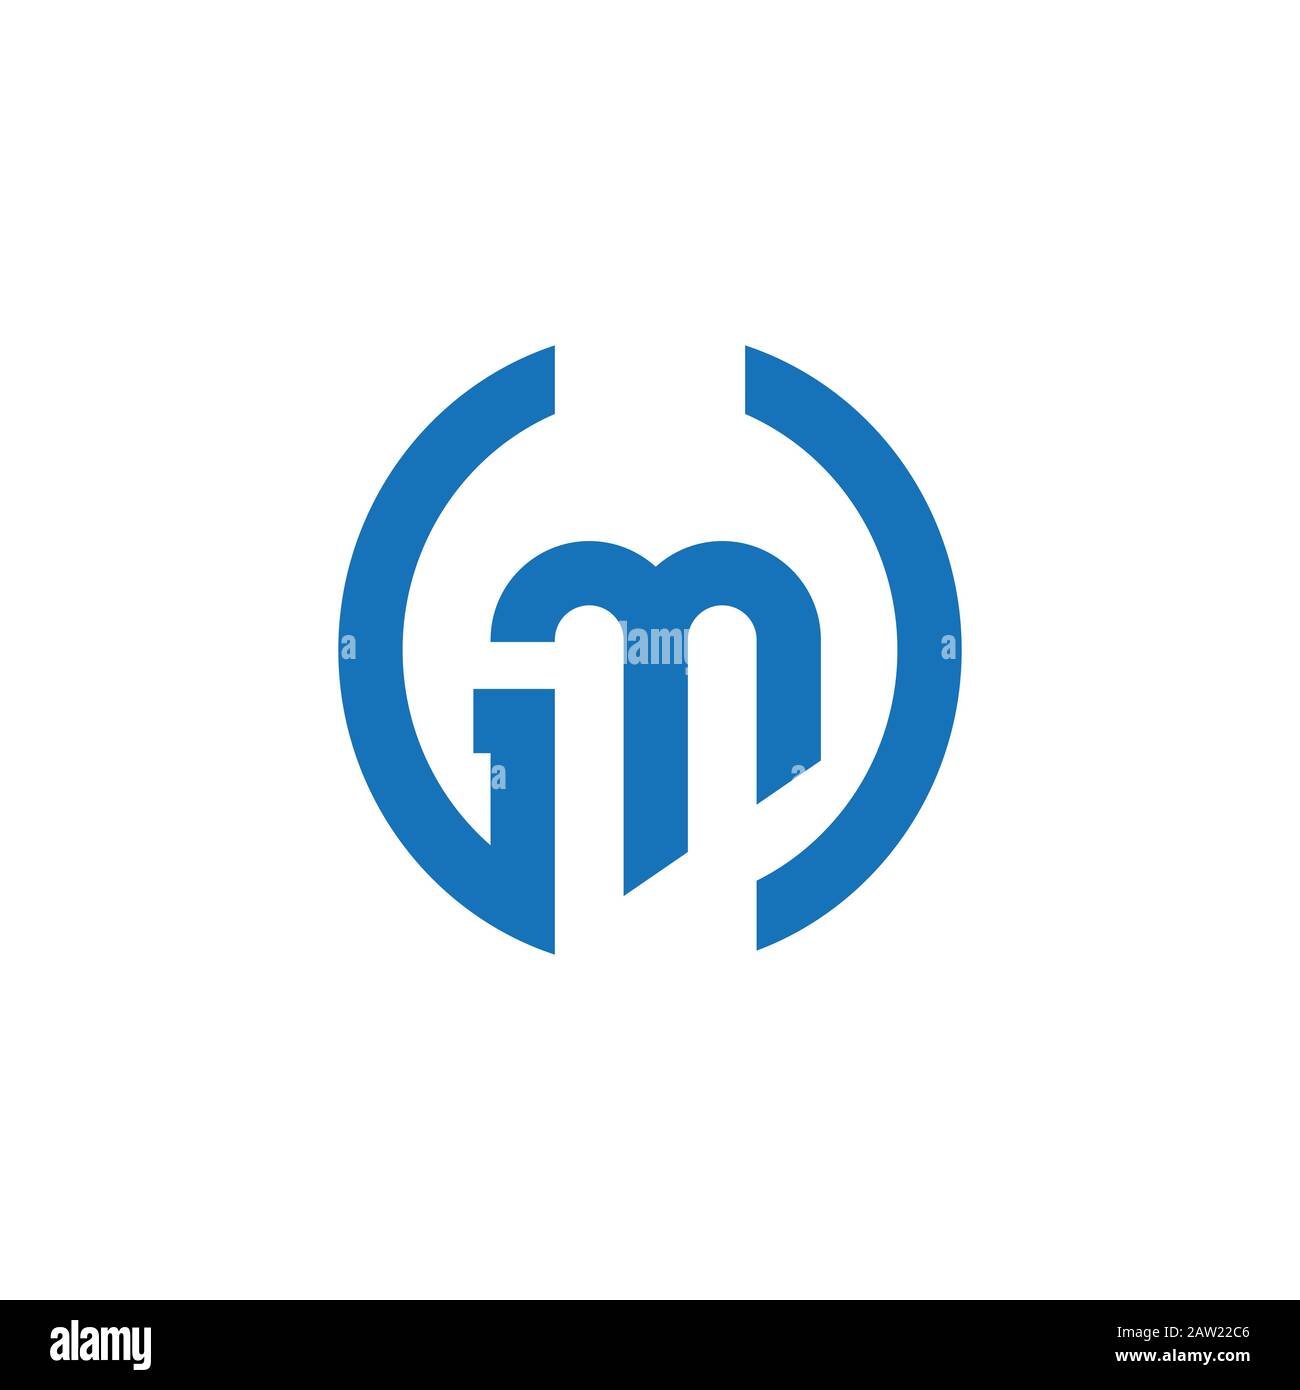 GM letter Type Logo Design vector Template. Abstract Letter GM logo Design  Stock Vector Image & Art - Alamy